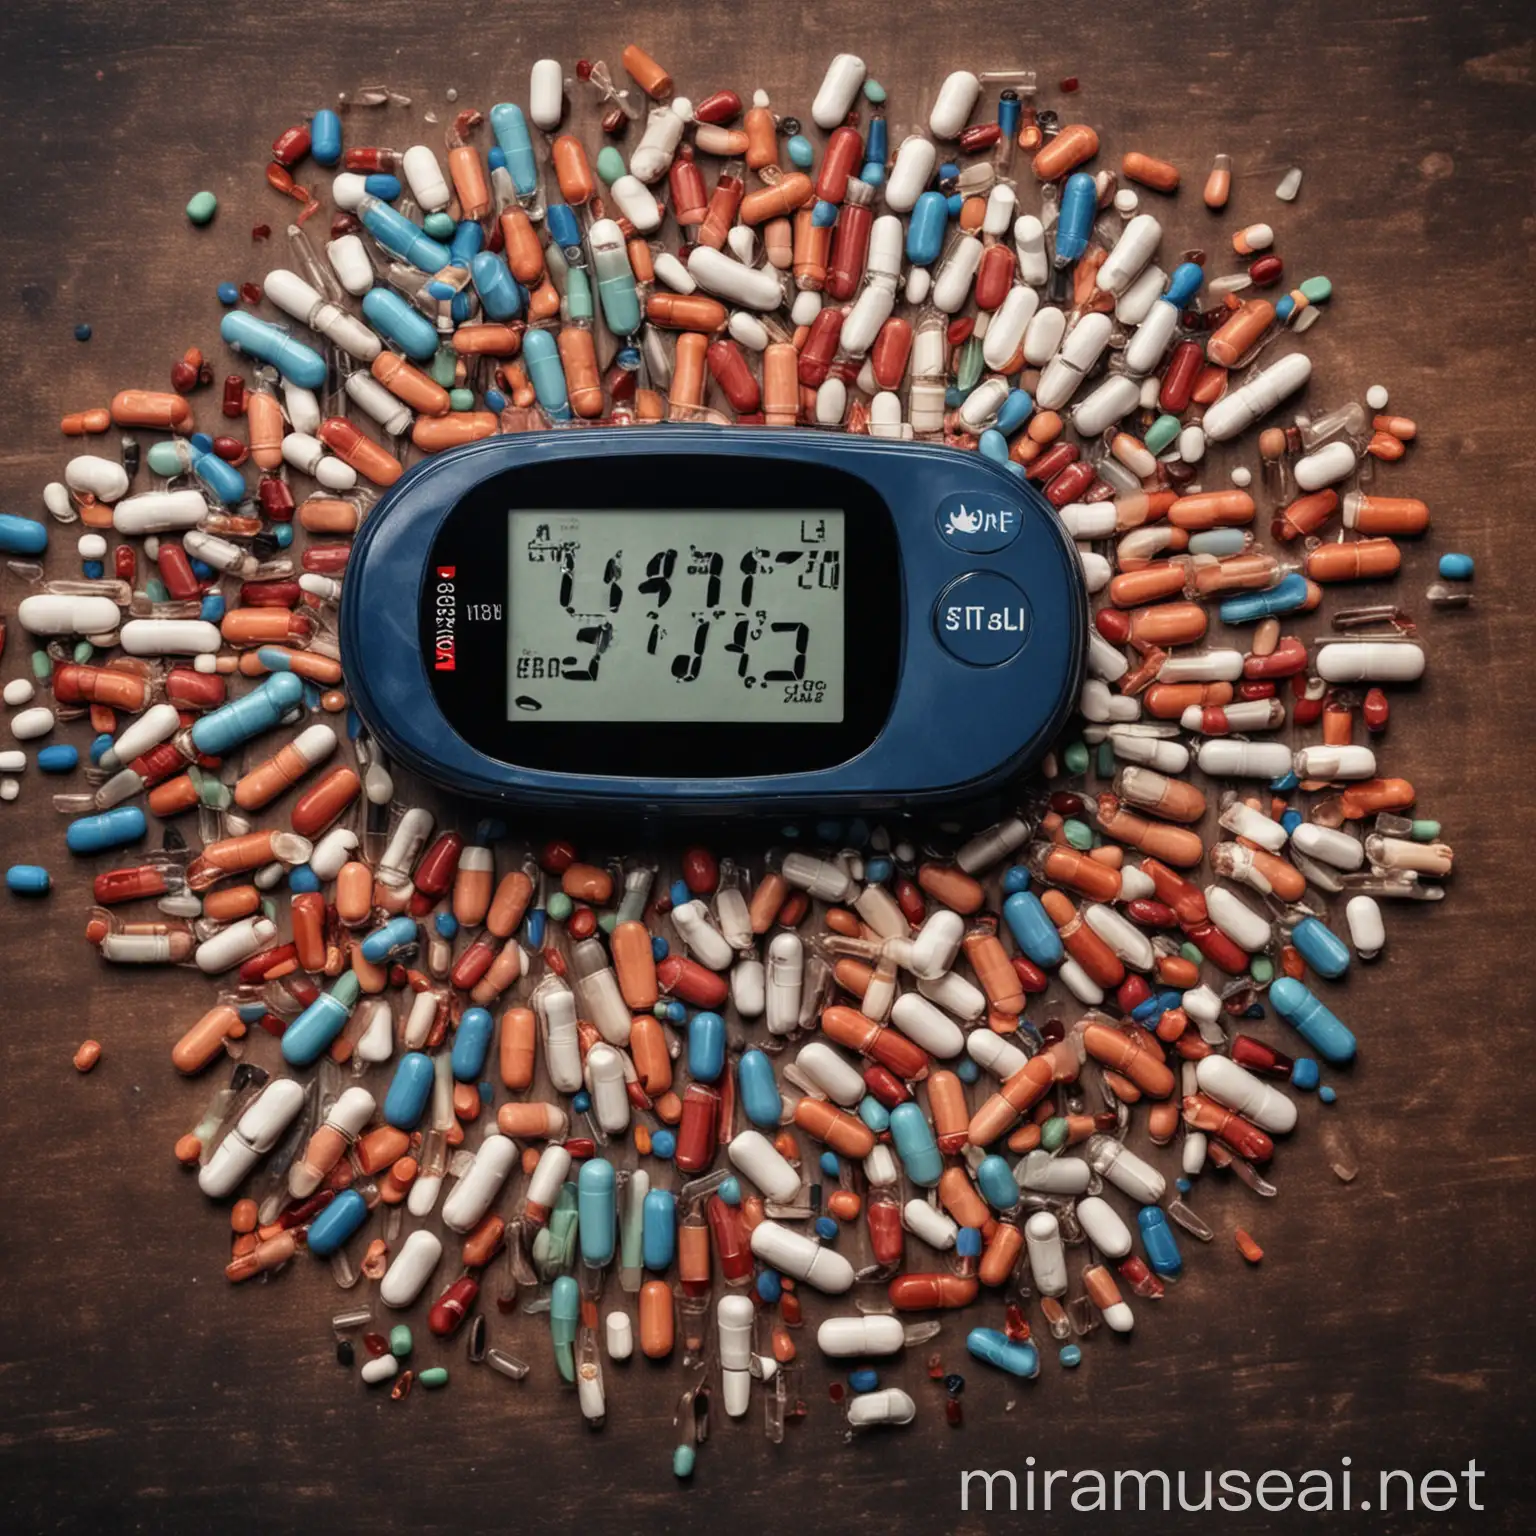 Diabetes Awareness and Global Impact Understanding the Epidemic